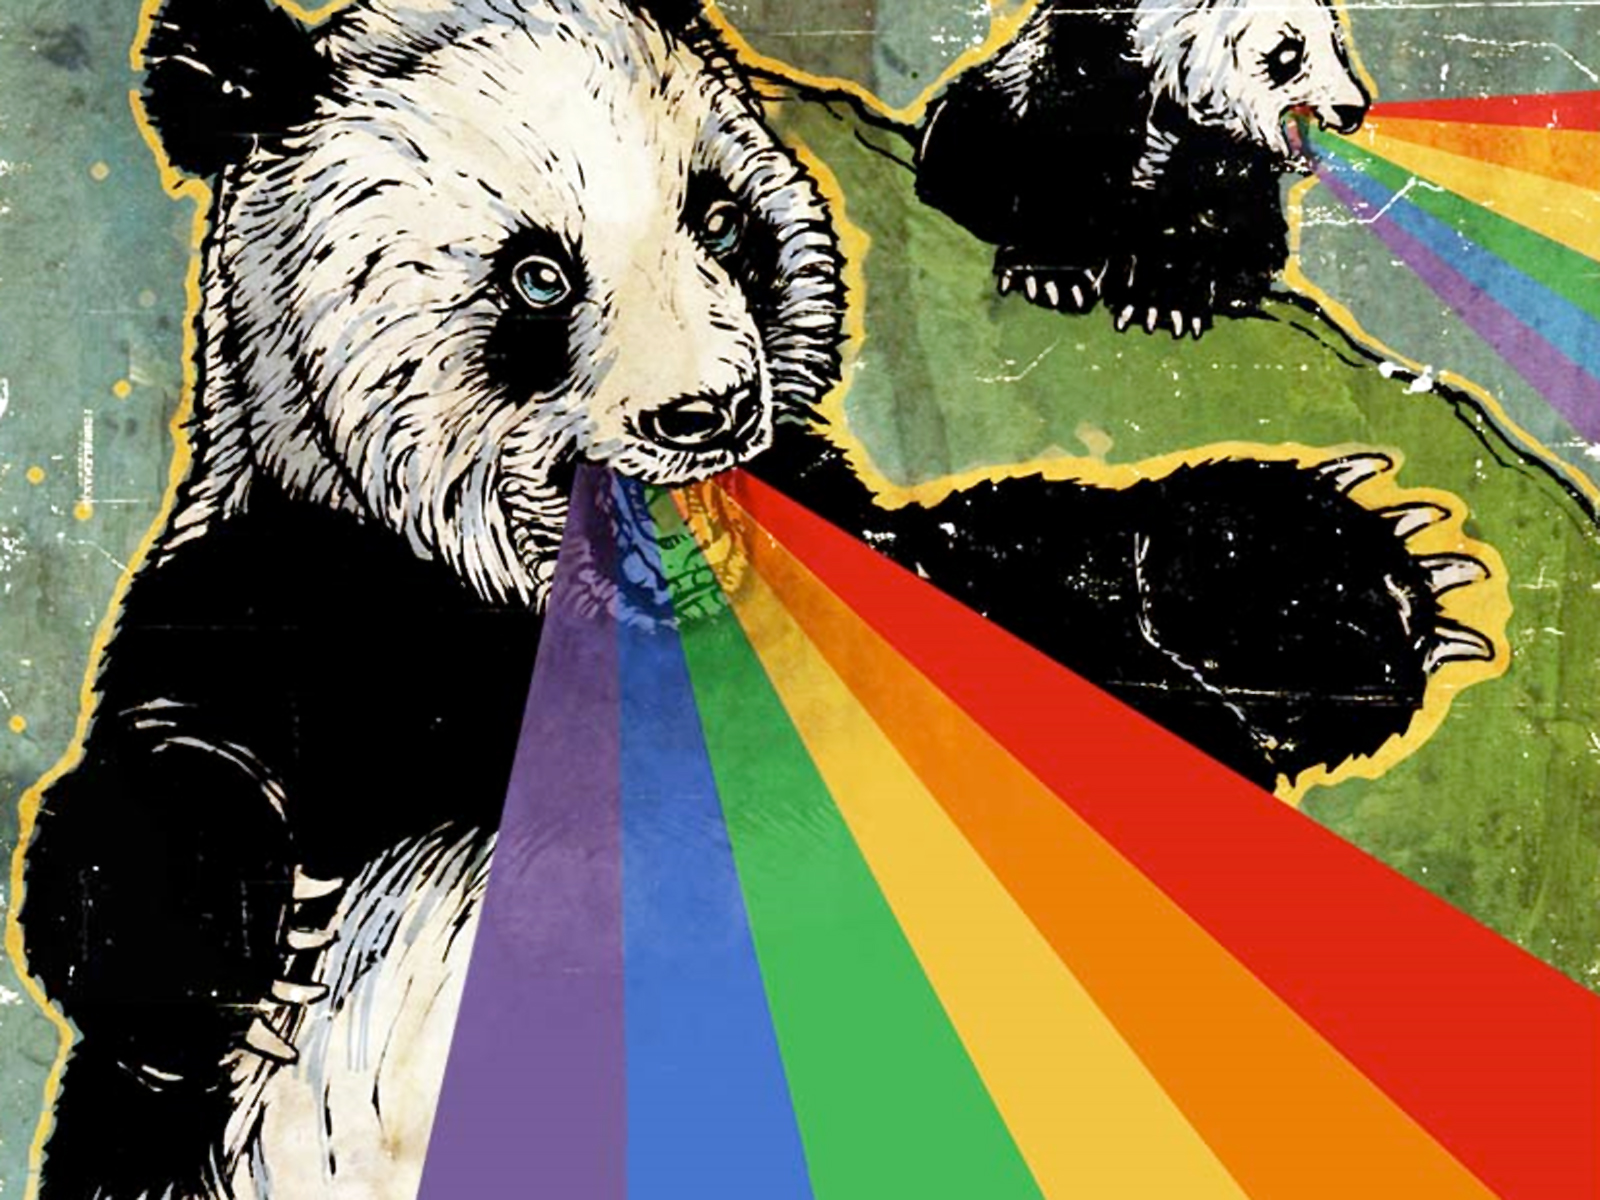 158602 Hintergrundbild herunterladen humor, lustig, bär, panda, regenbogen - Bildschirmschoner und Bilder kostenlos